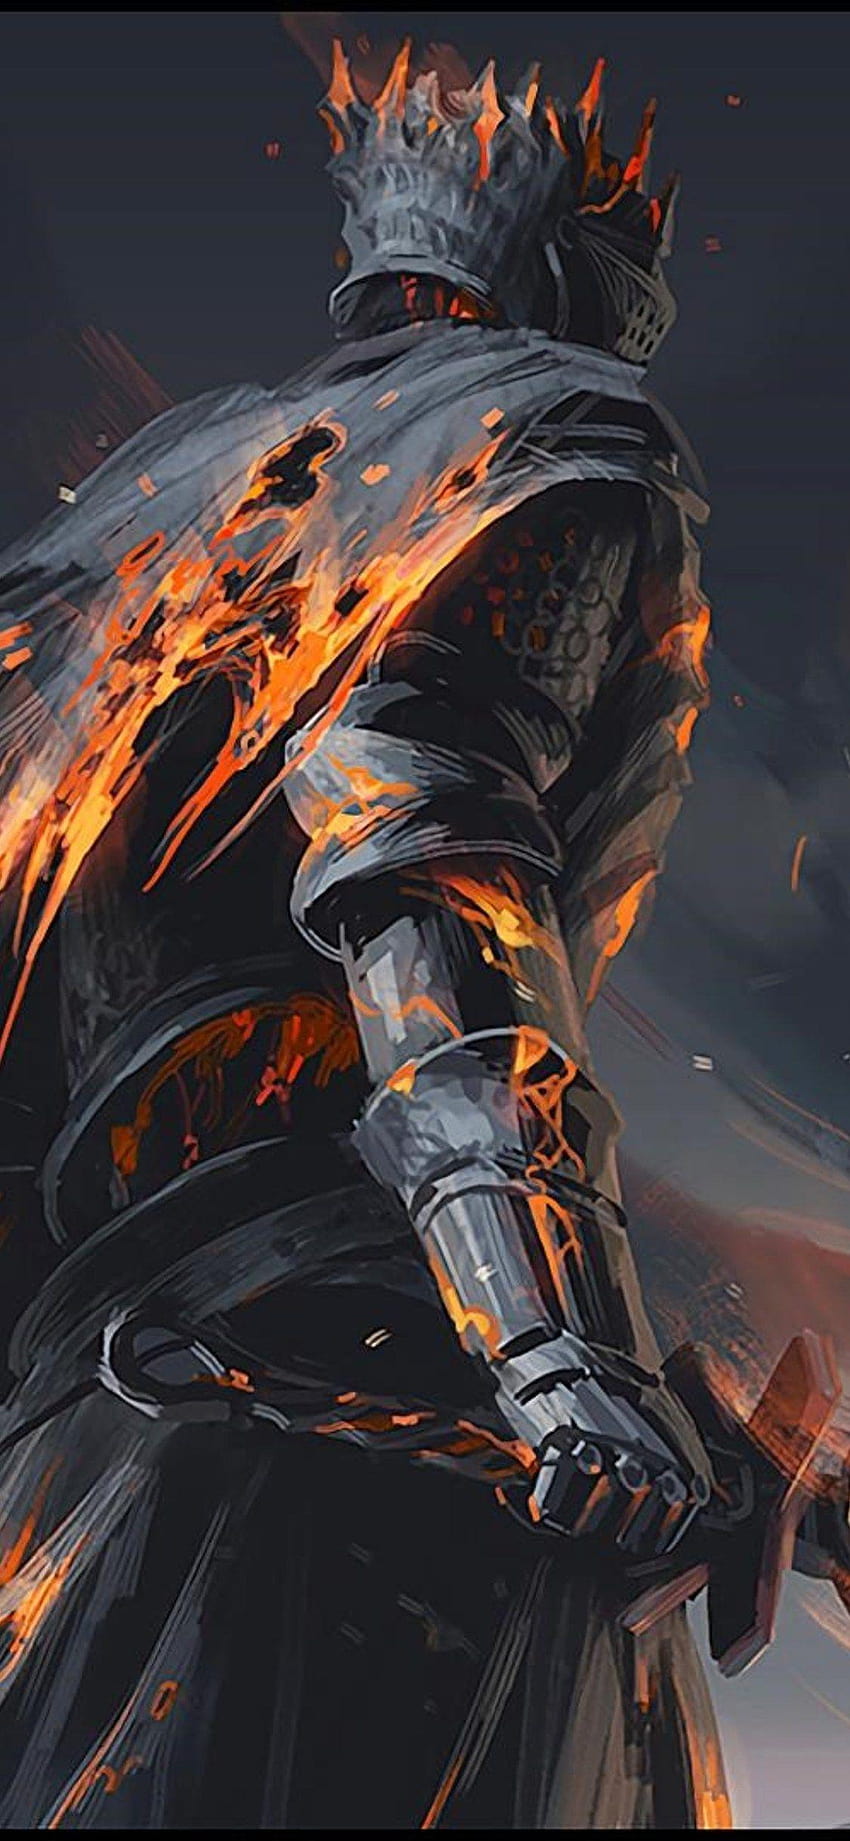 Dark Souls 3 Wallpaper by AllOfGameWallpapers on DeviantArt